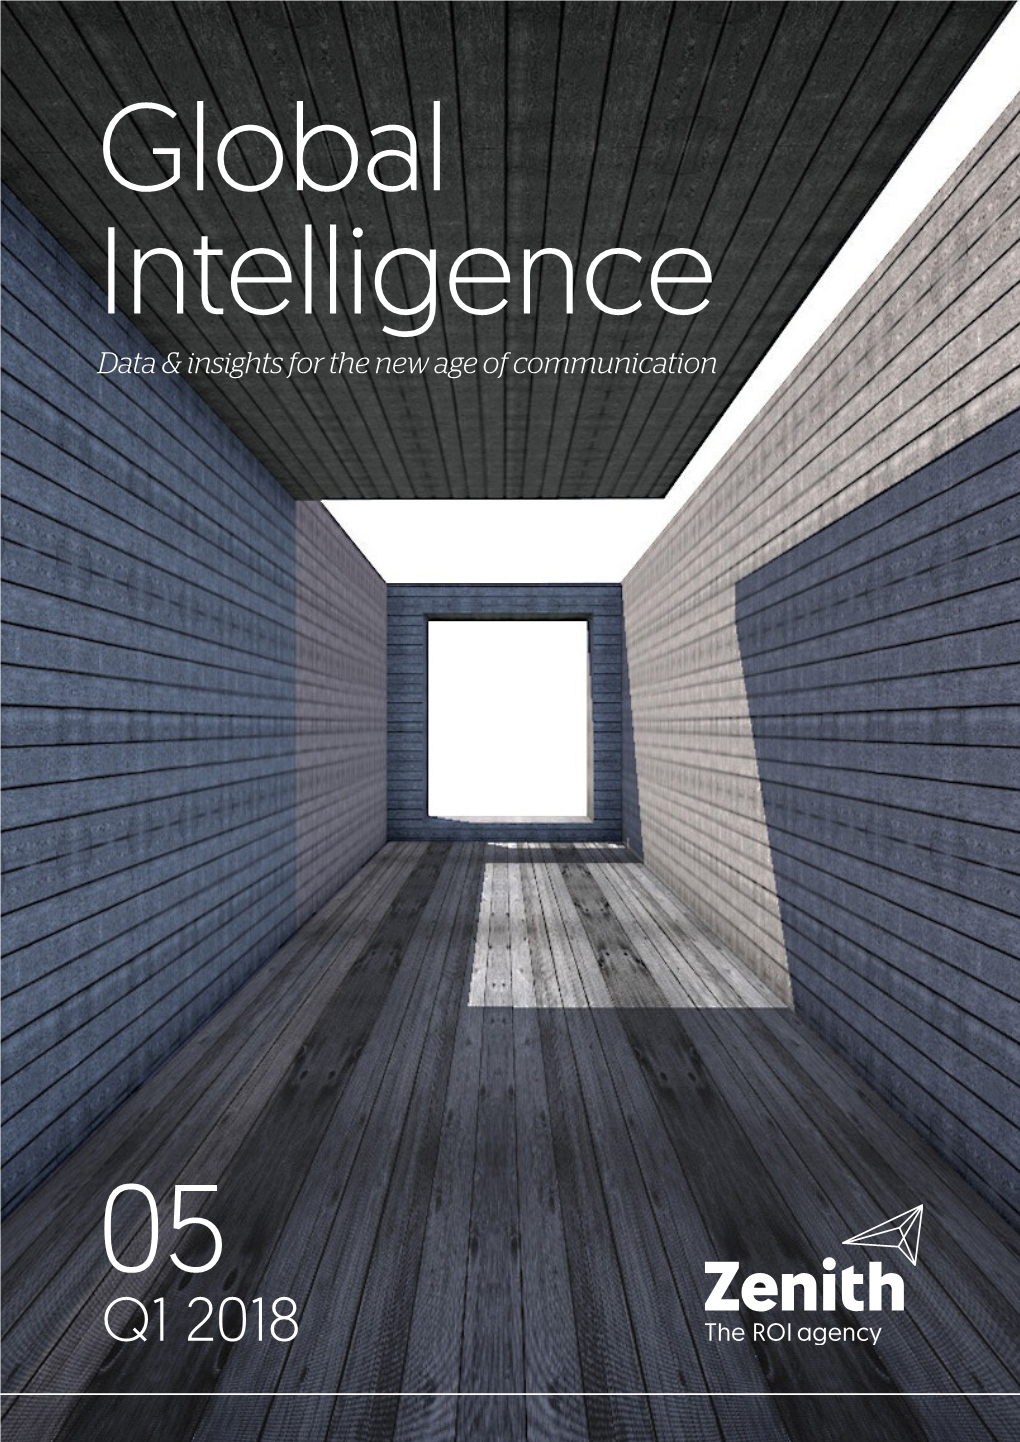 Q1 2018 Global Intelligence Contents